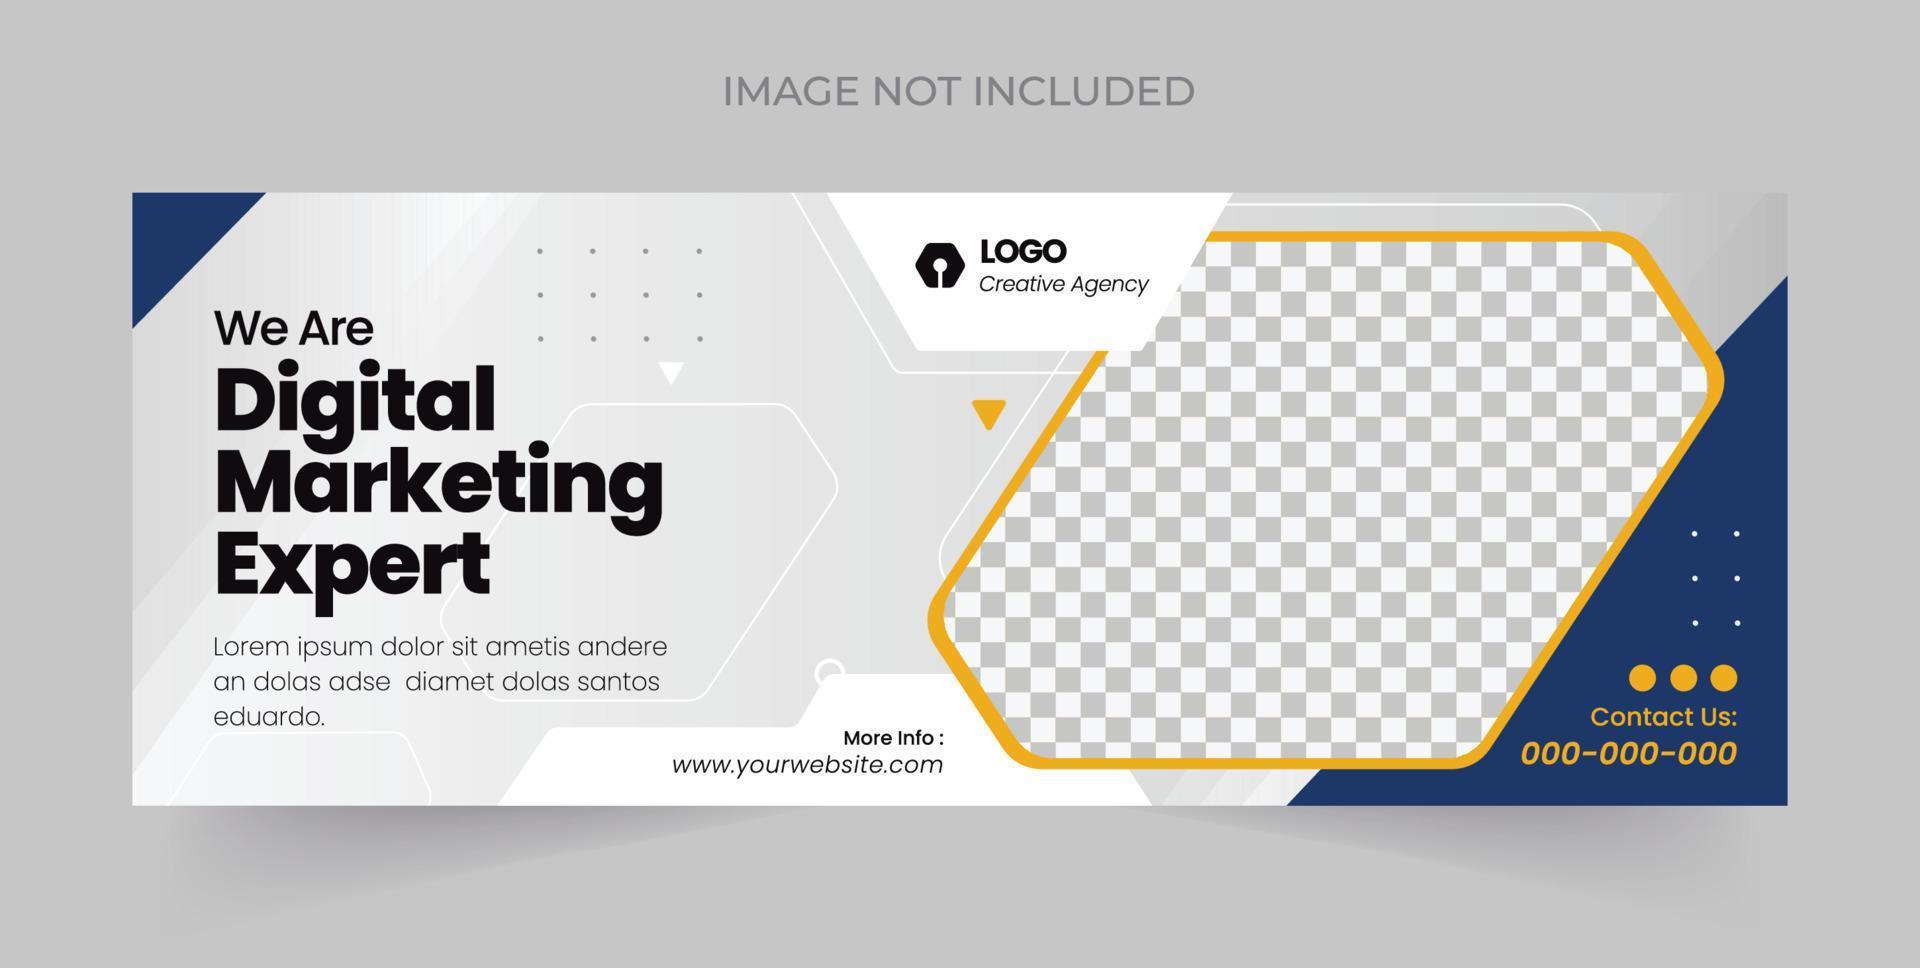 Social media cover vector templates fully editable, advertising design, web banner template